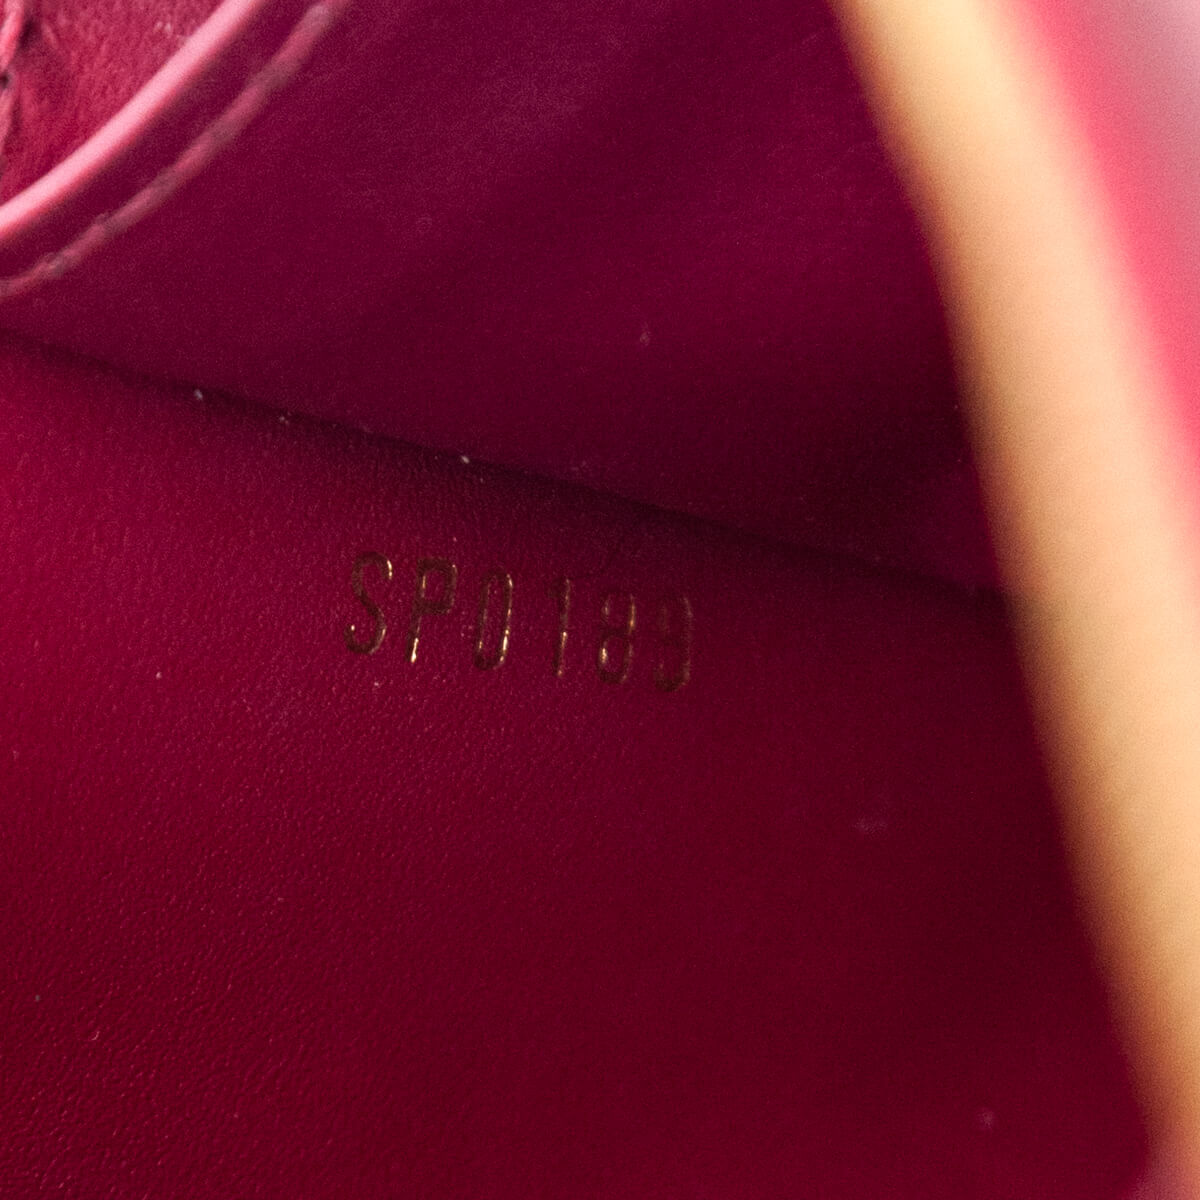 Louis Vuitton Monogram & Fuchsia Flore Chain Wallet Bag - Love that Bag etc - Preowned Authentic Designer Handbags & Preloved Fashions